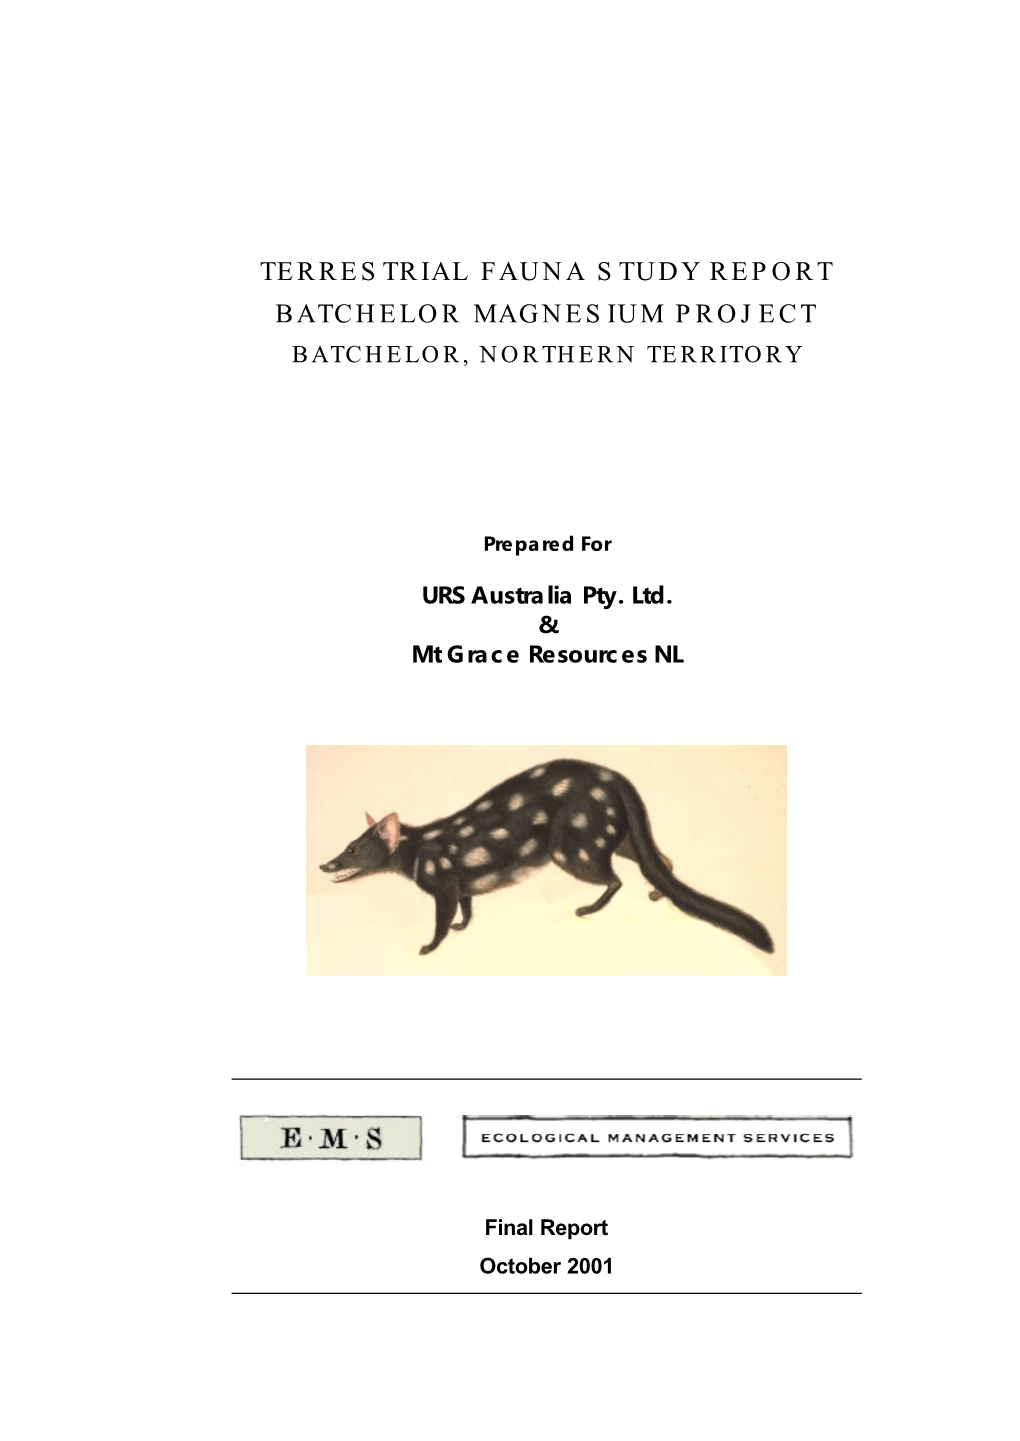 Terrestrial Fauna Study Report Batchelor Magnesium Project Batchelor, Northern Territory